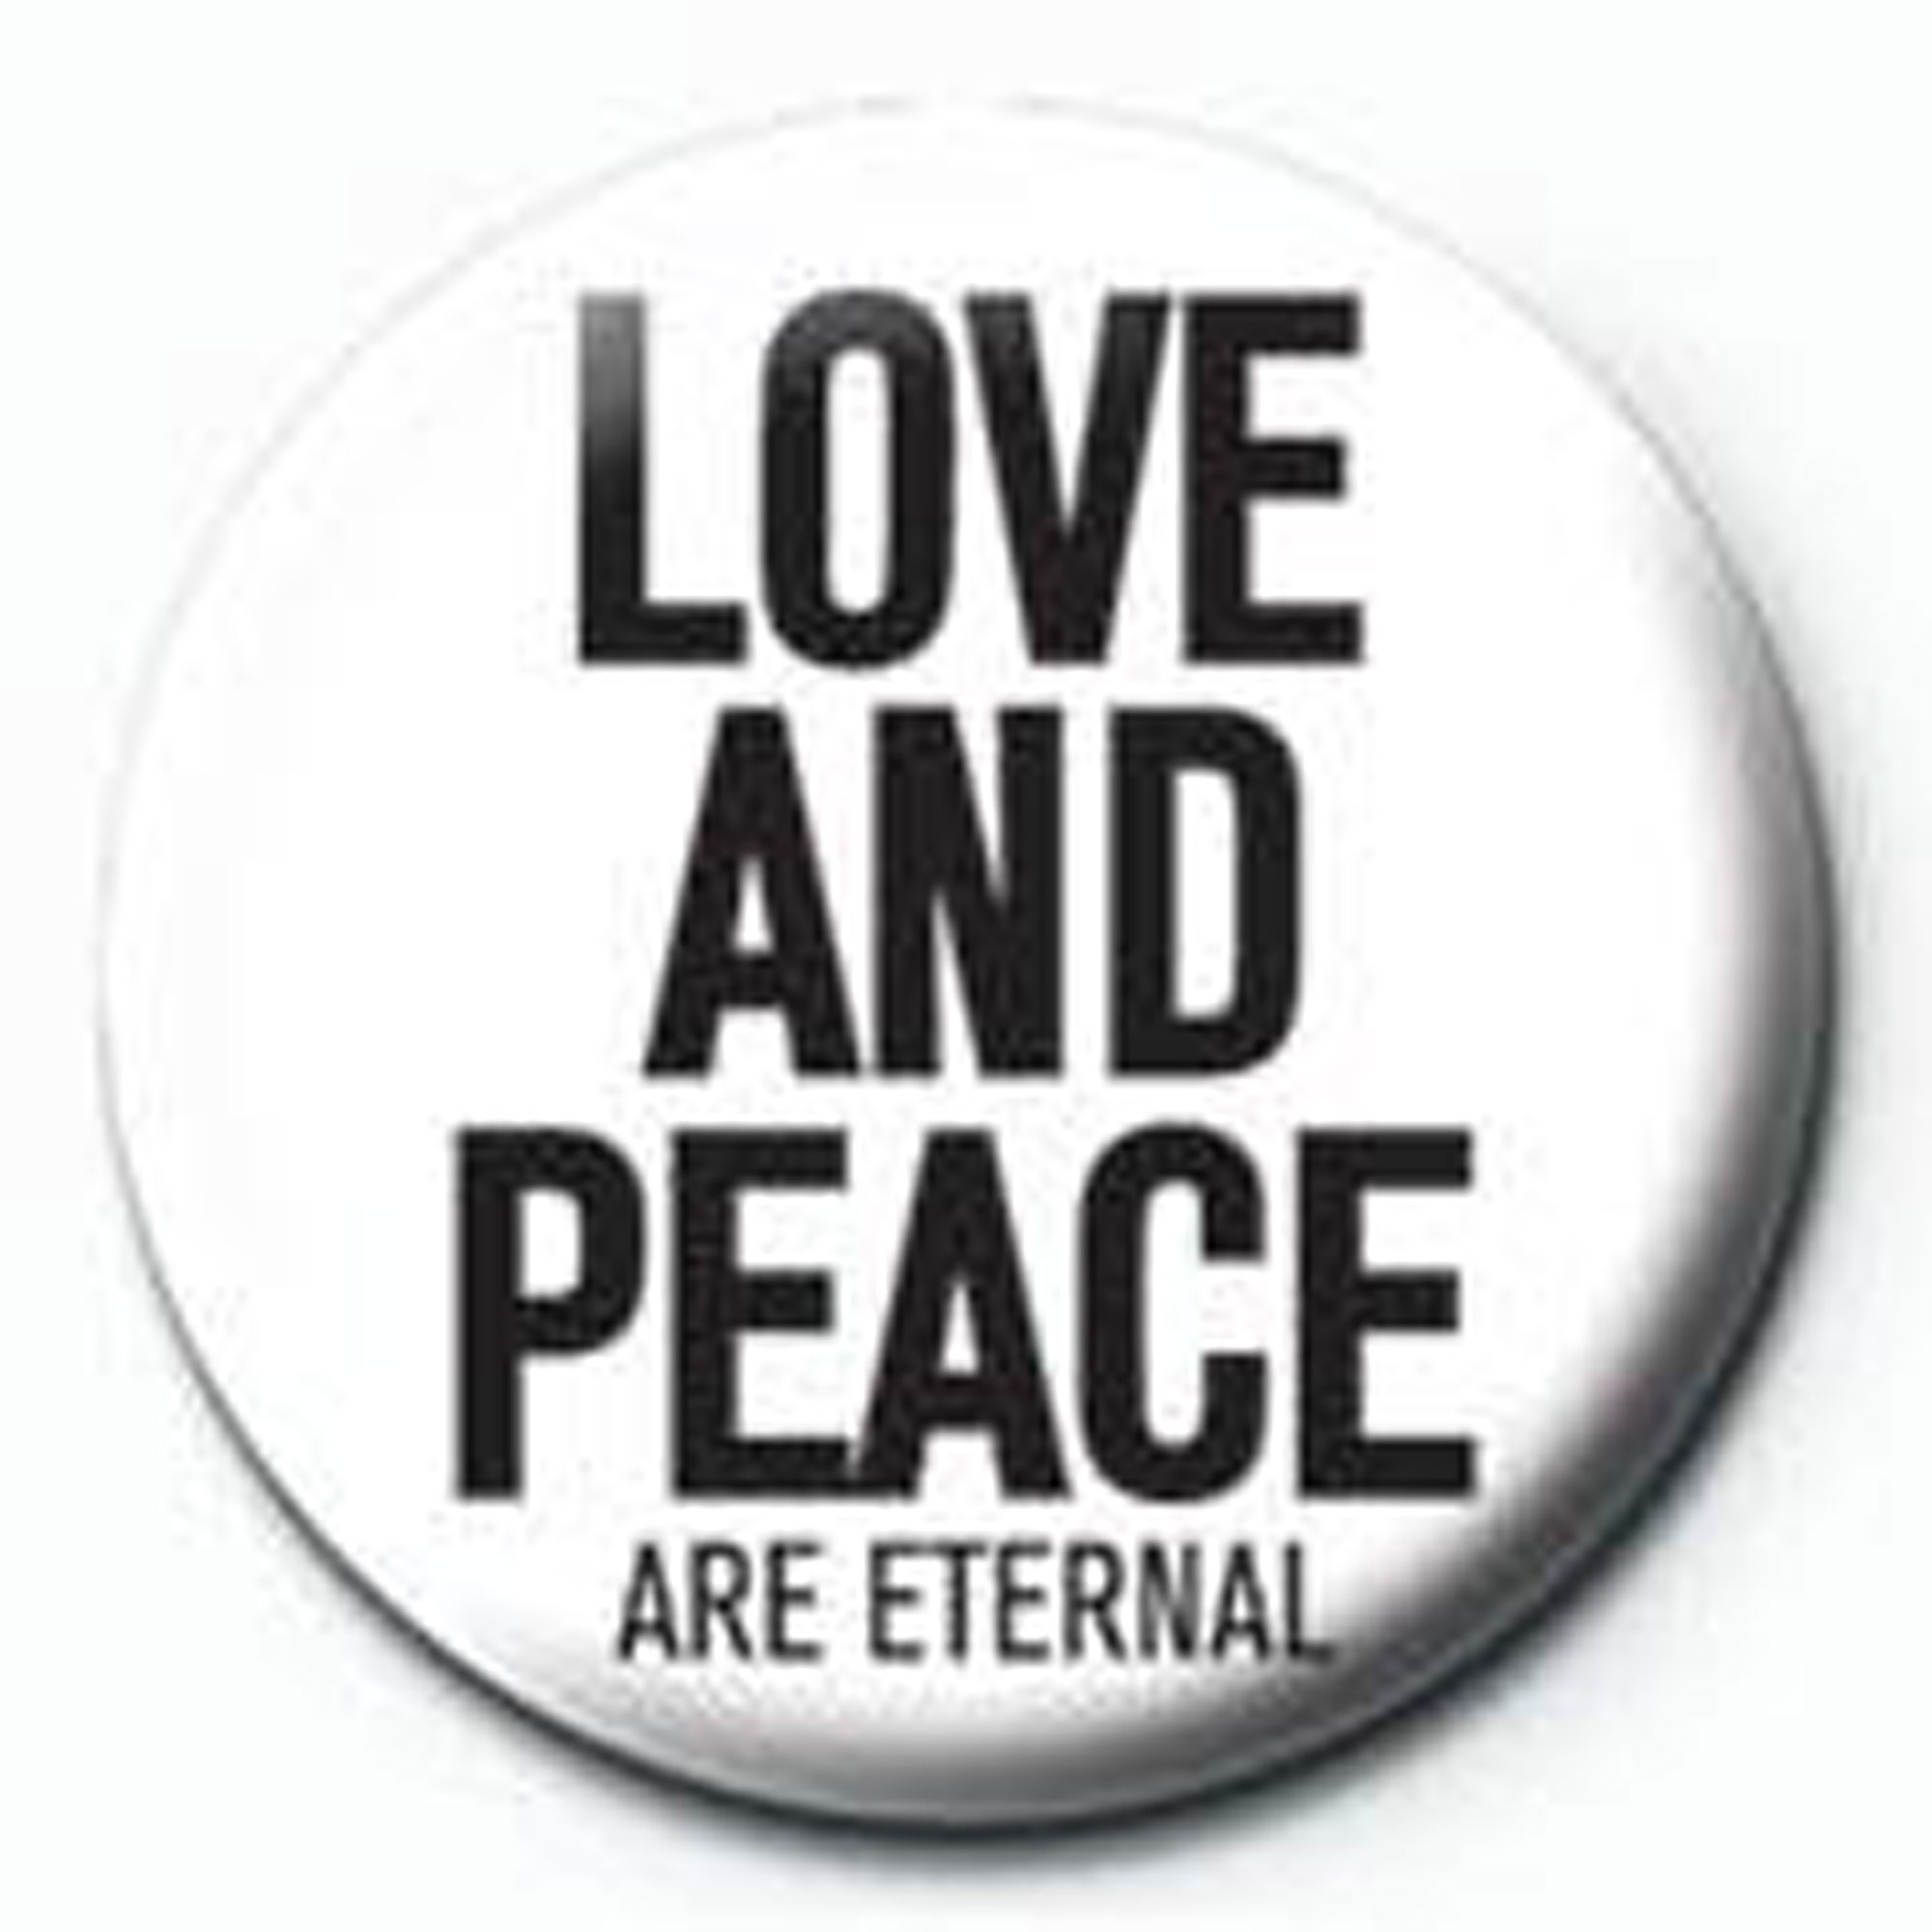 Fun - Love Peace and